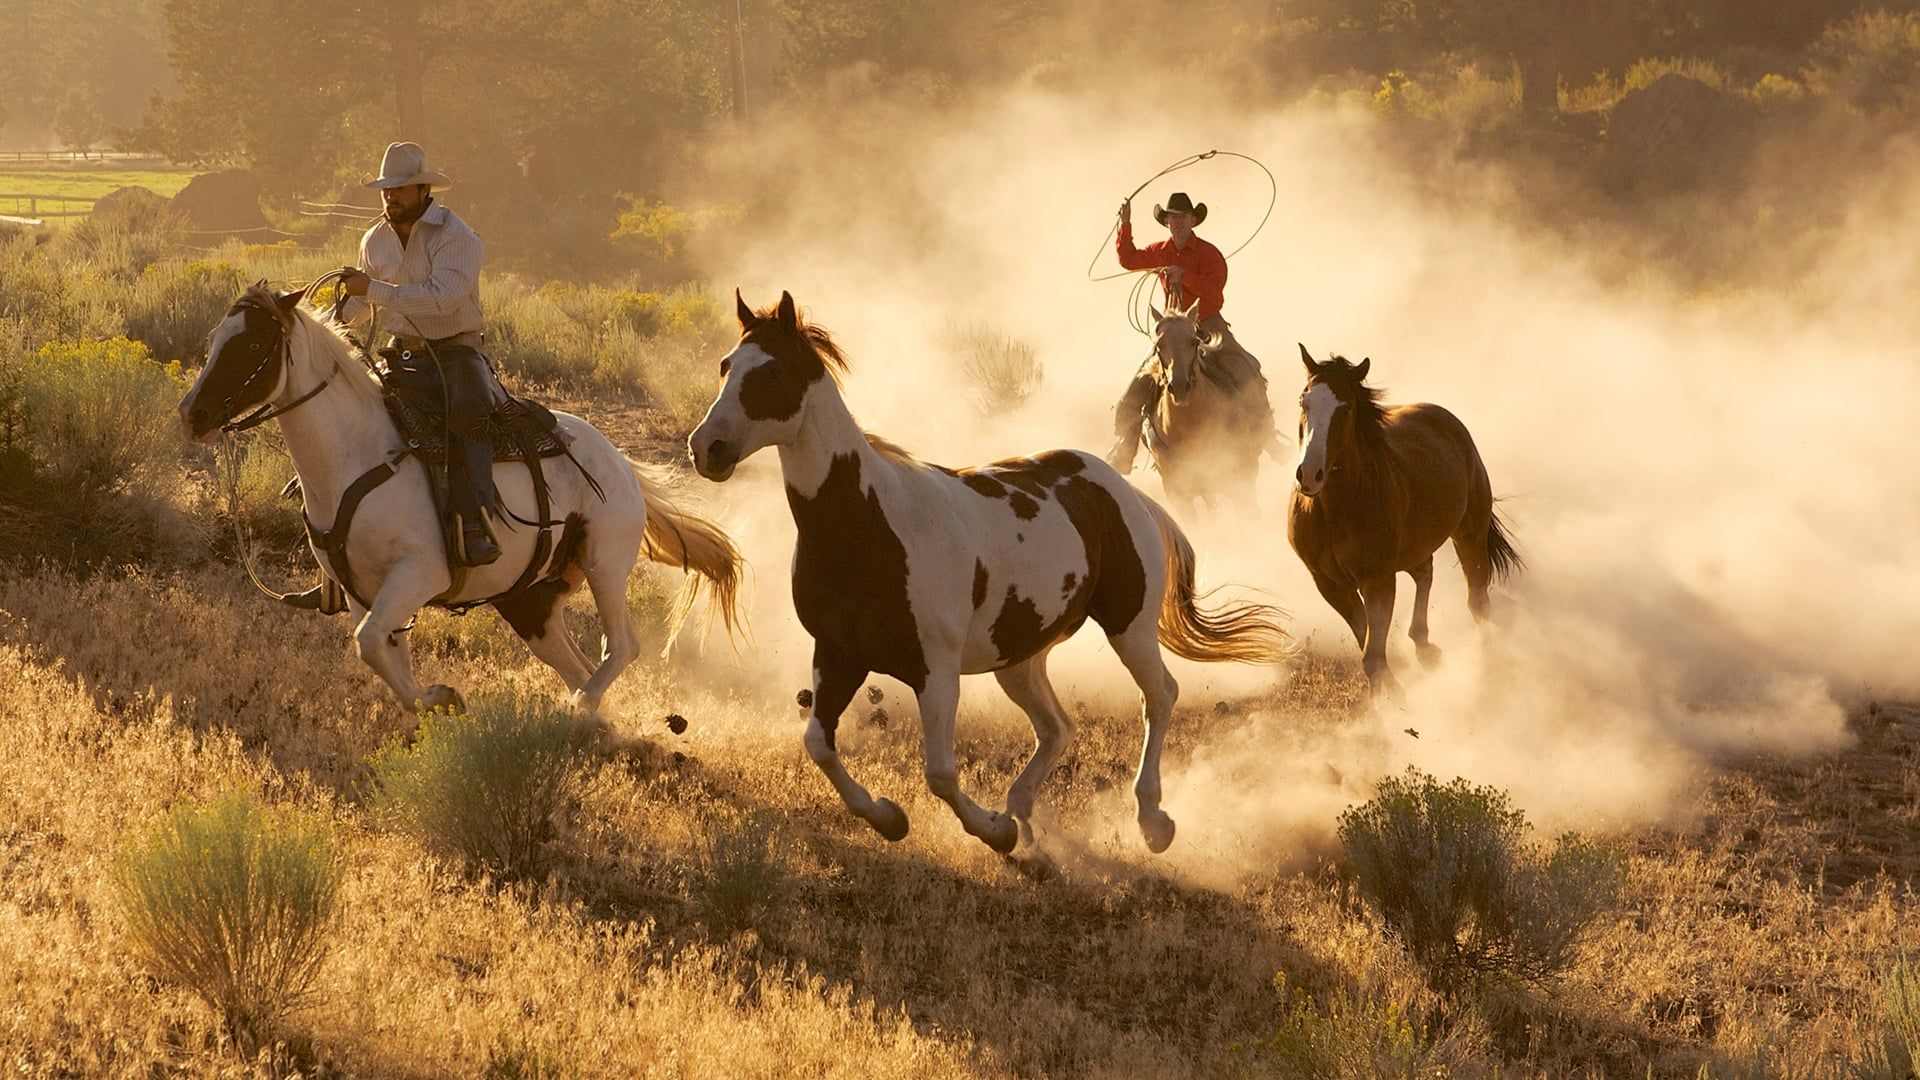 Wild West: America's Great Frontier background